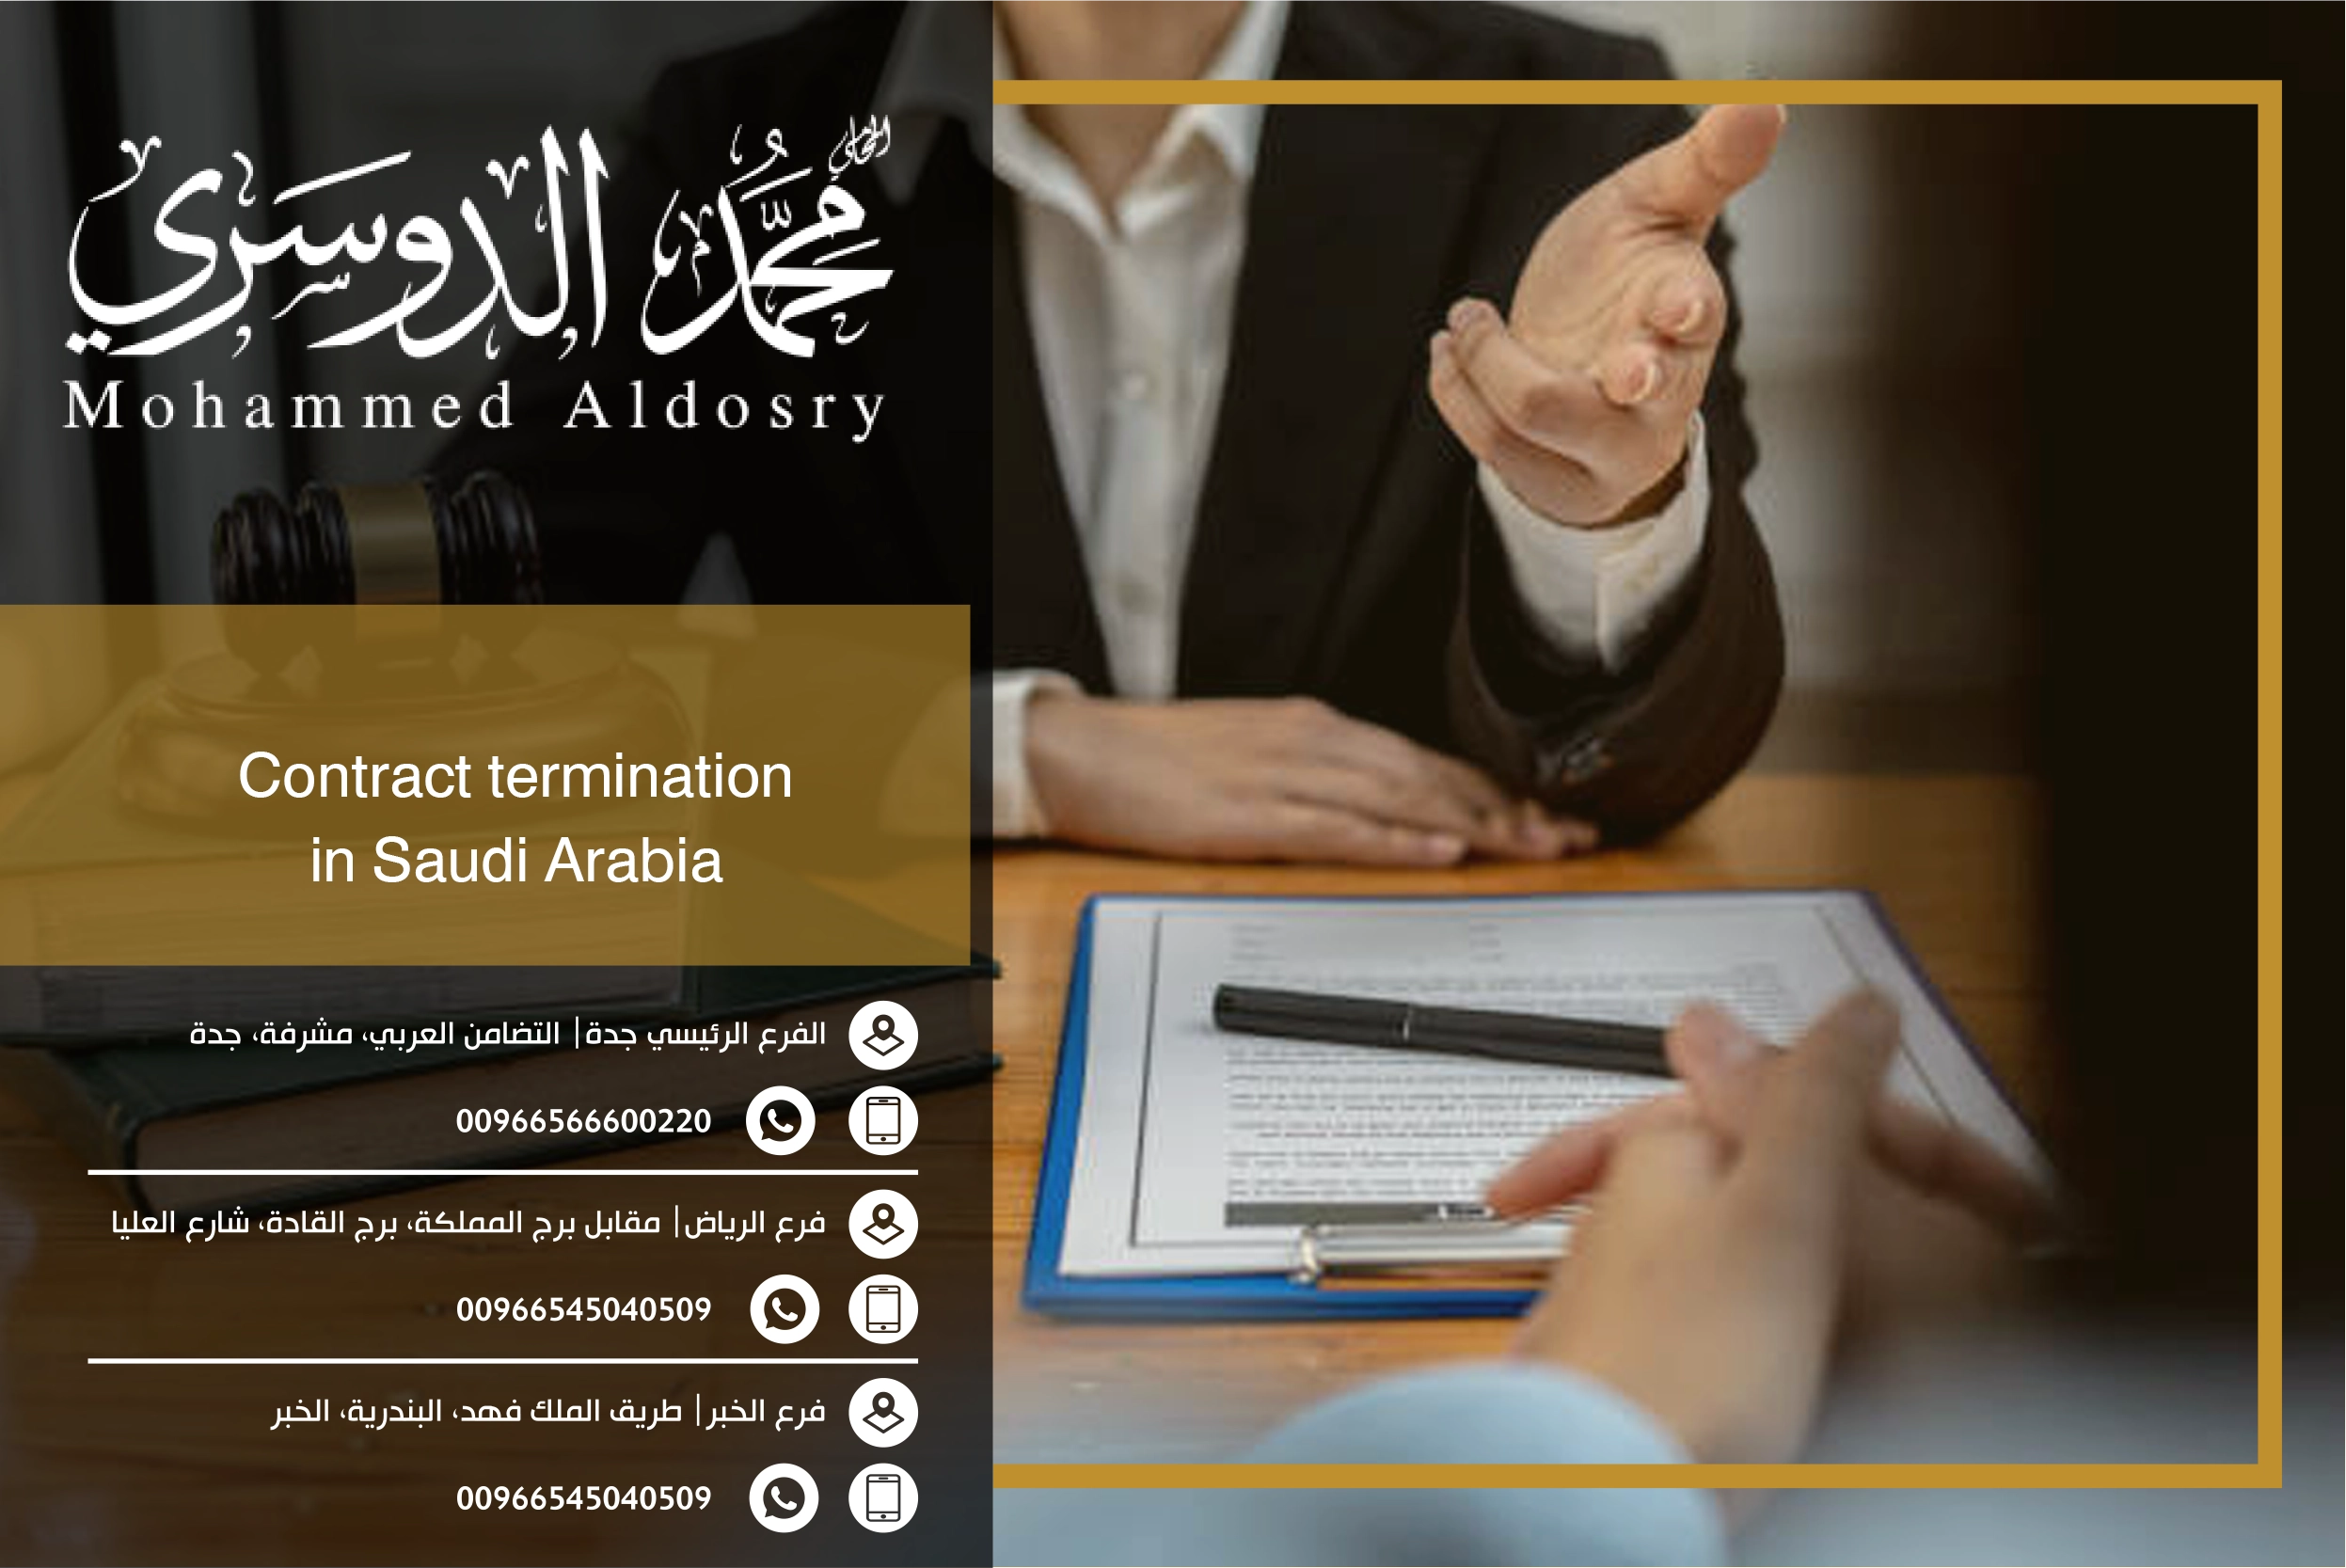 Contract termination in Saudi Arabia